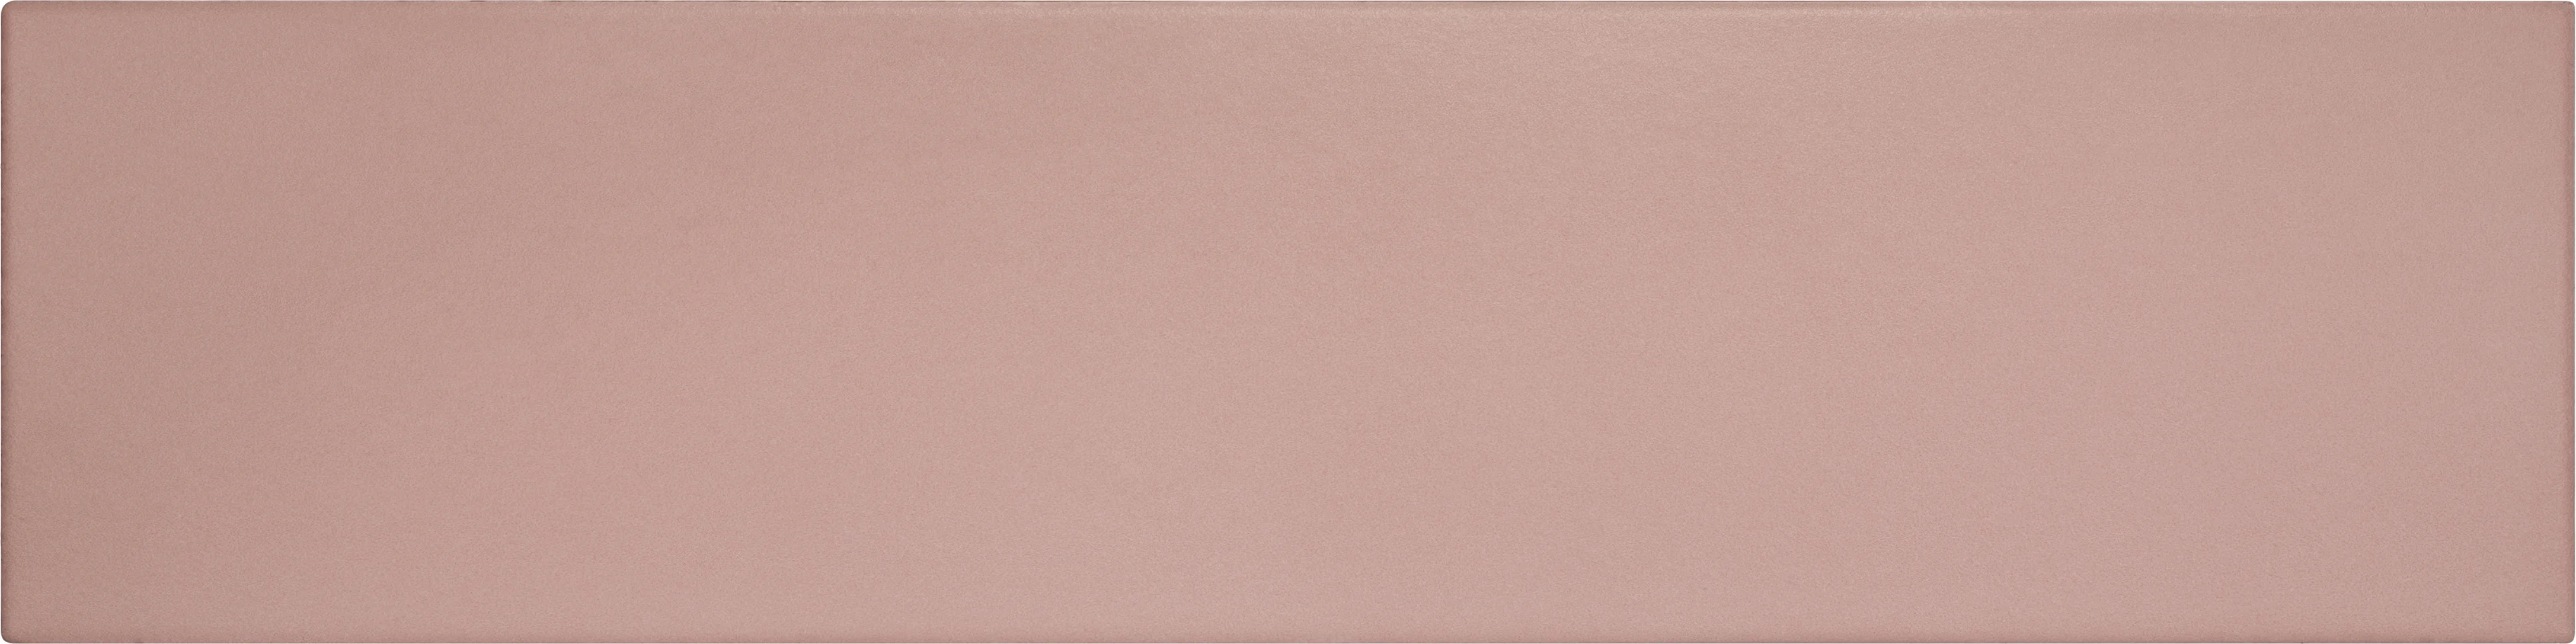 Equipe Stromboli Rose Breeze 9,2x36,8 cm